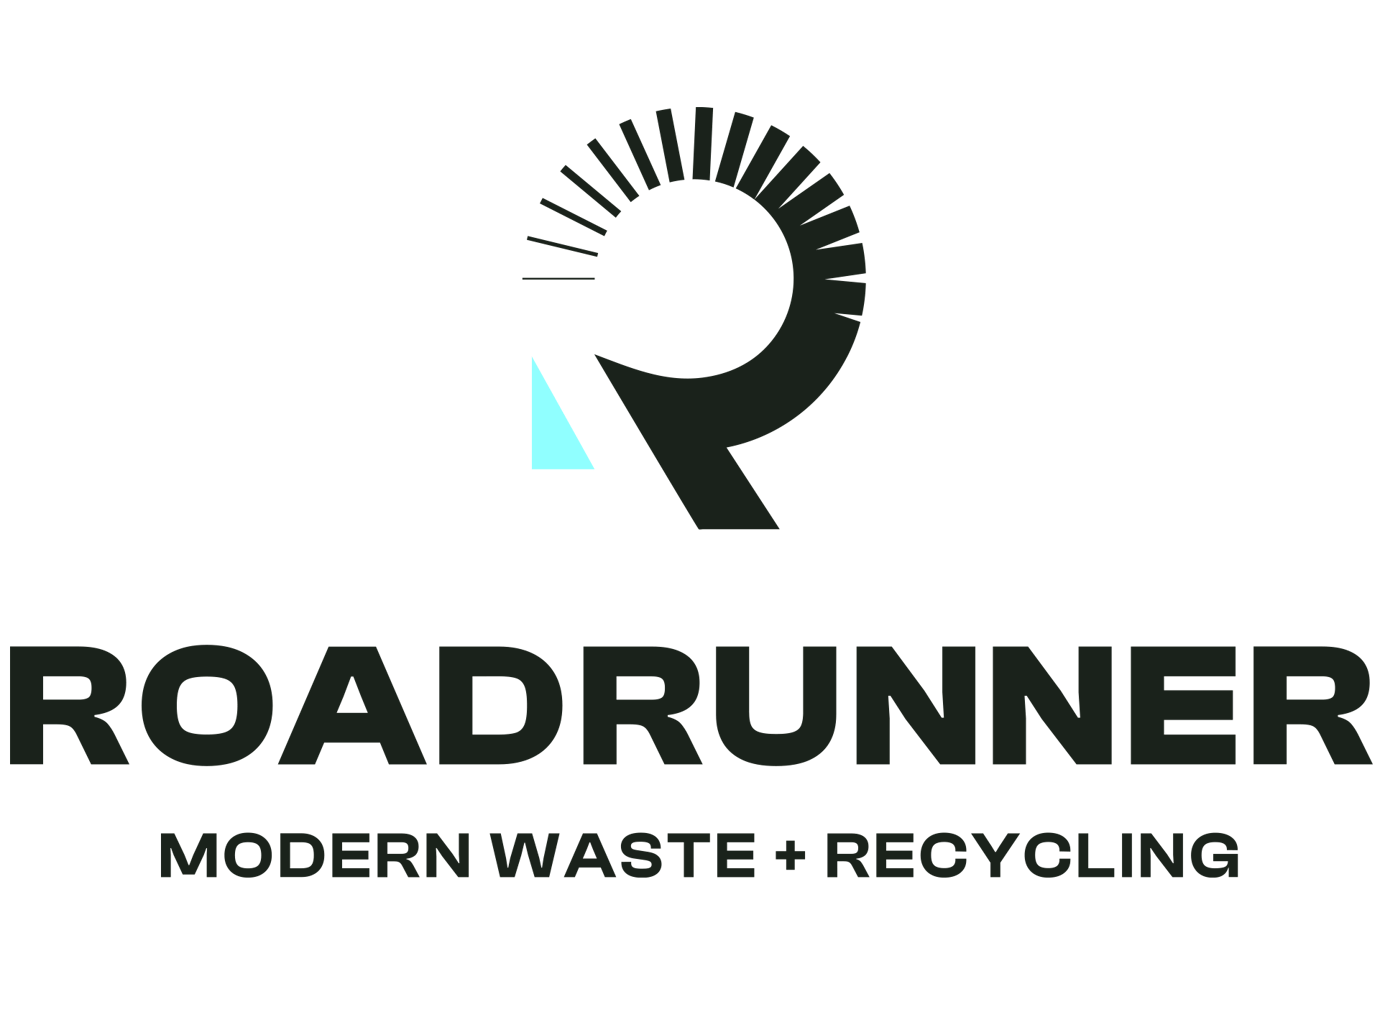 Roadrunner logo and tagline 